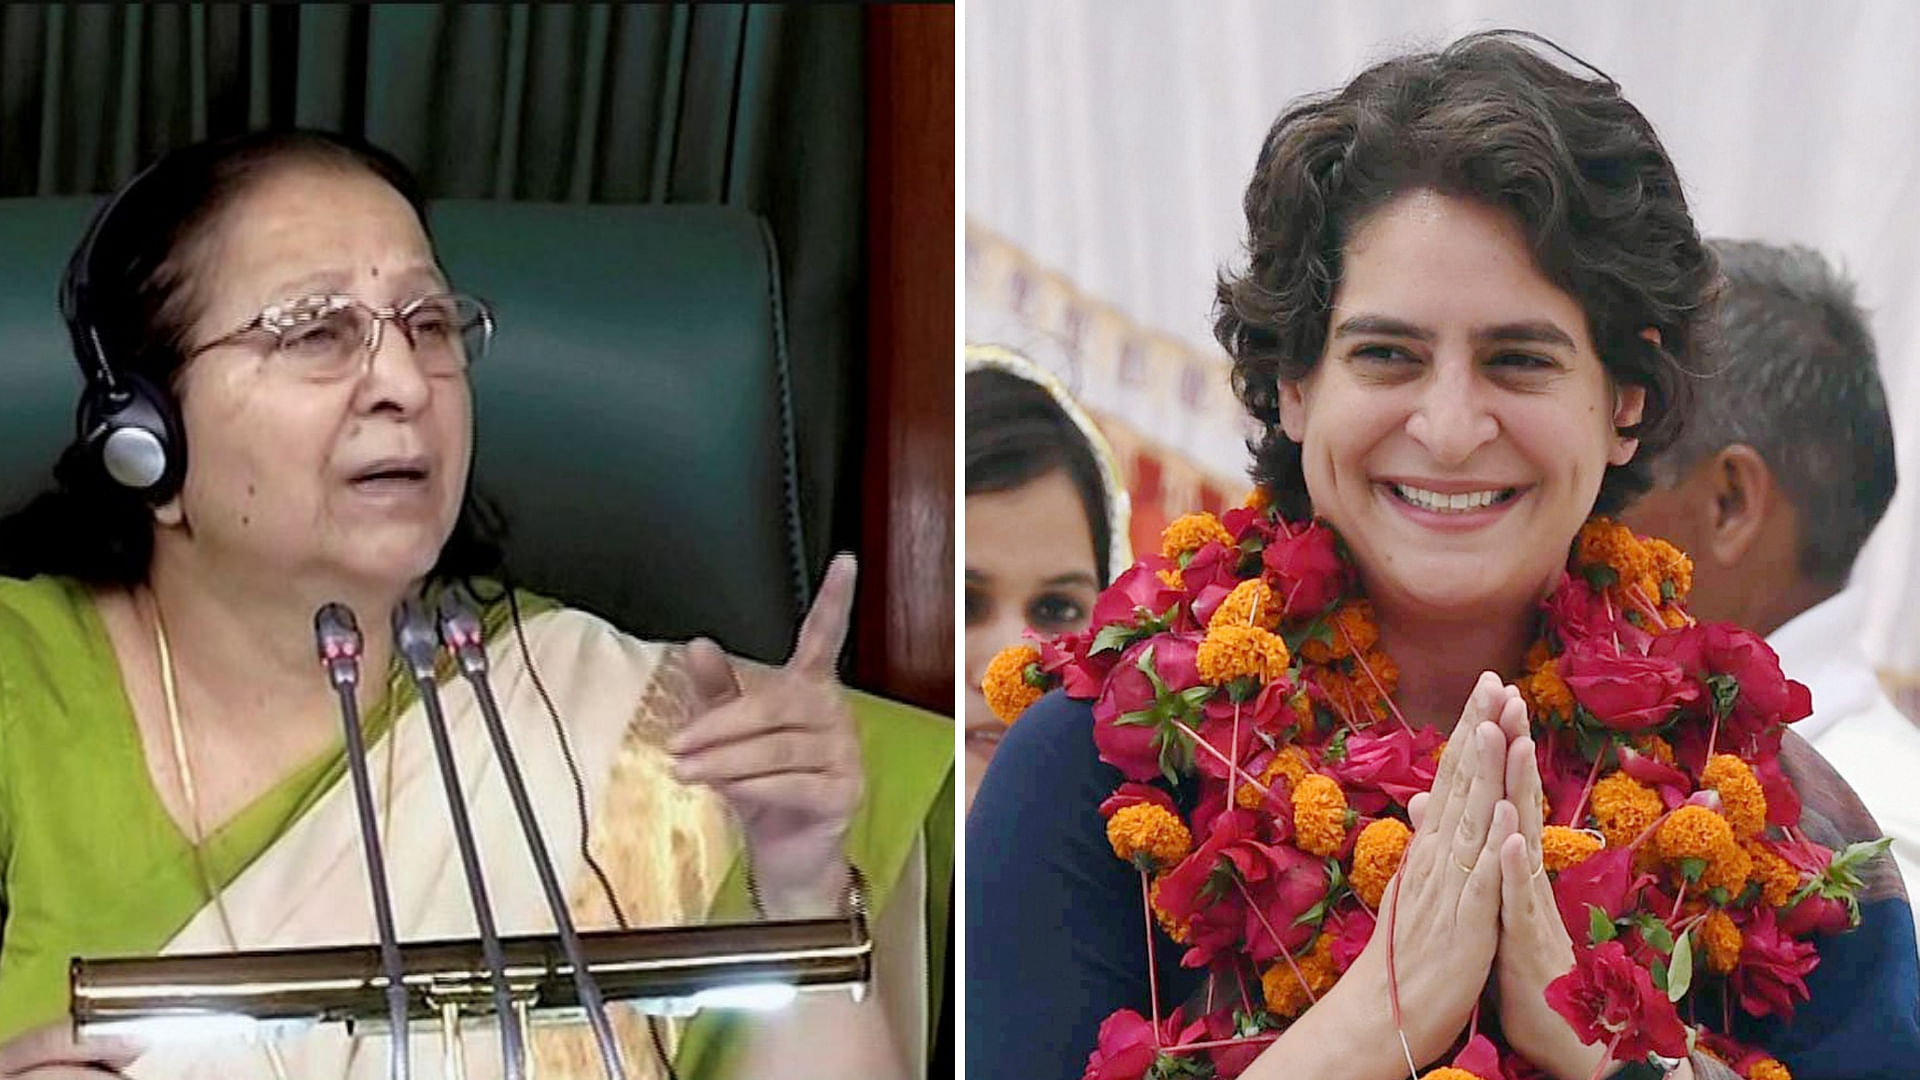 Sumitra Mahajan said Priyanka Gandhi’s entry into politics showed that Rahul Gandhi cannot handle politics alone.